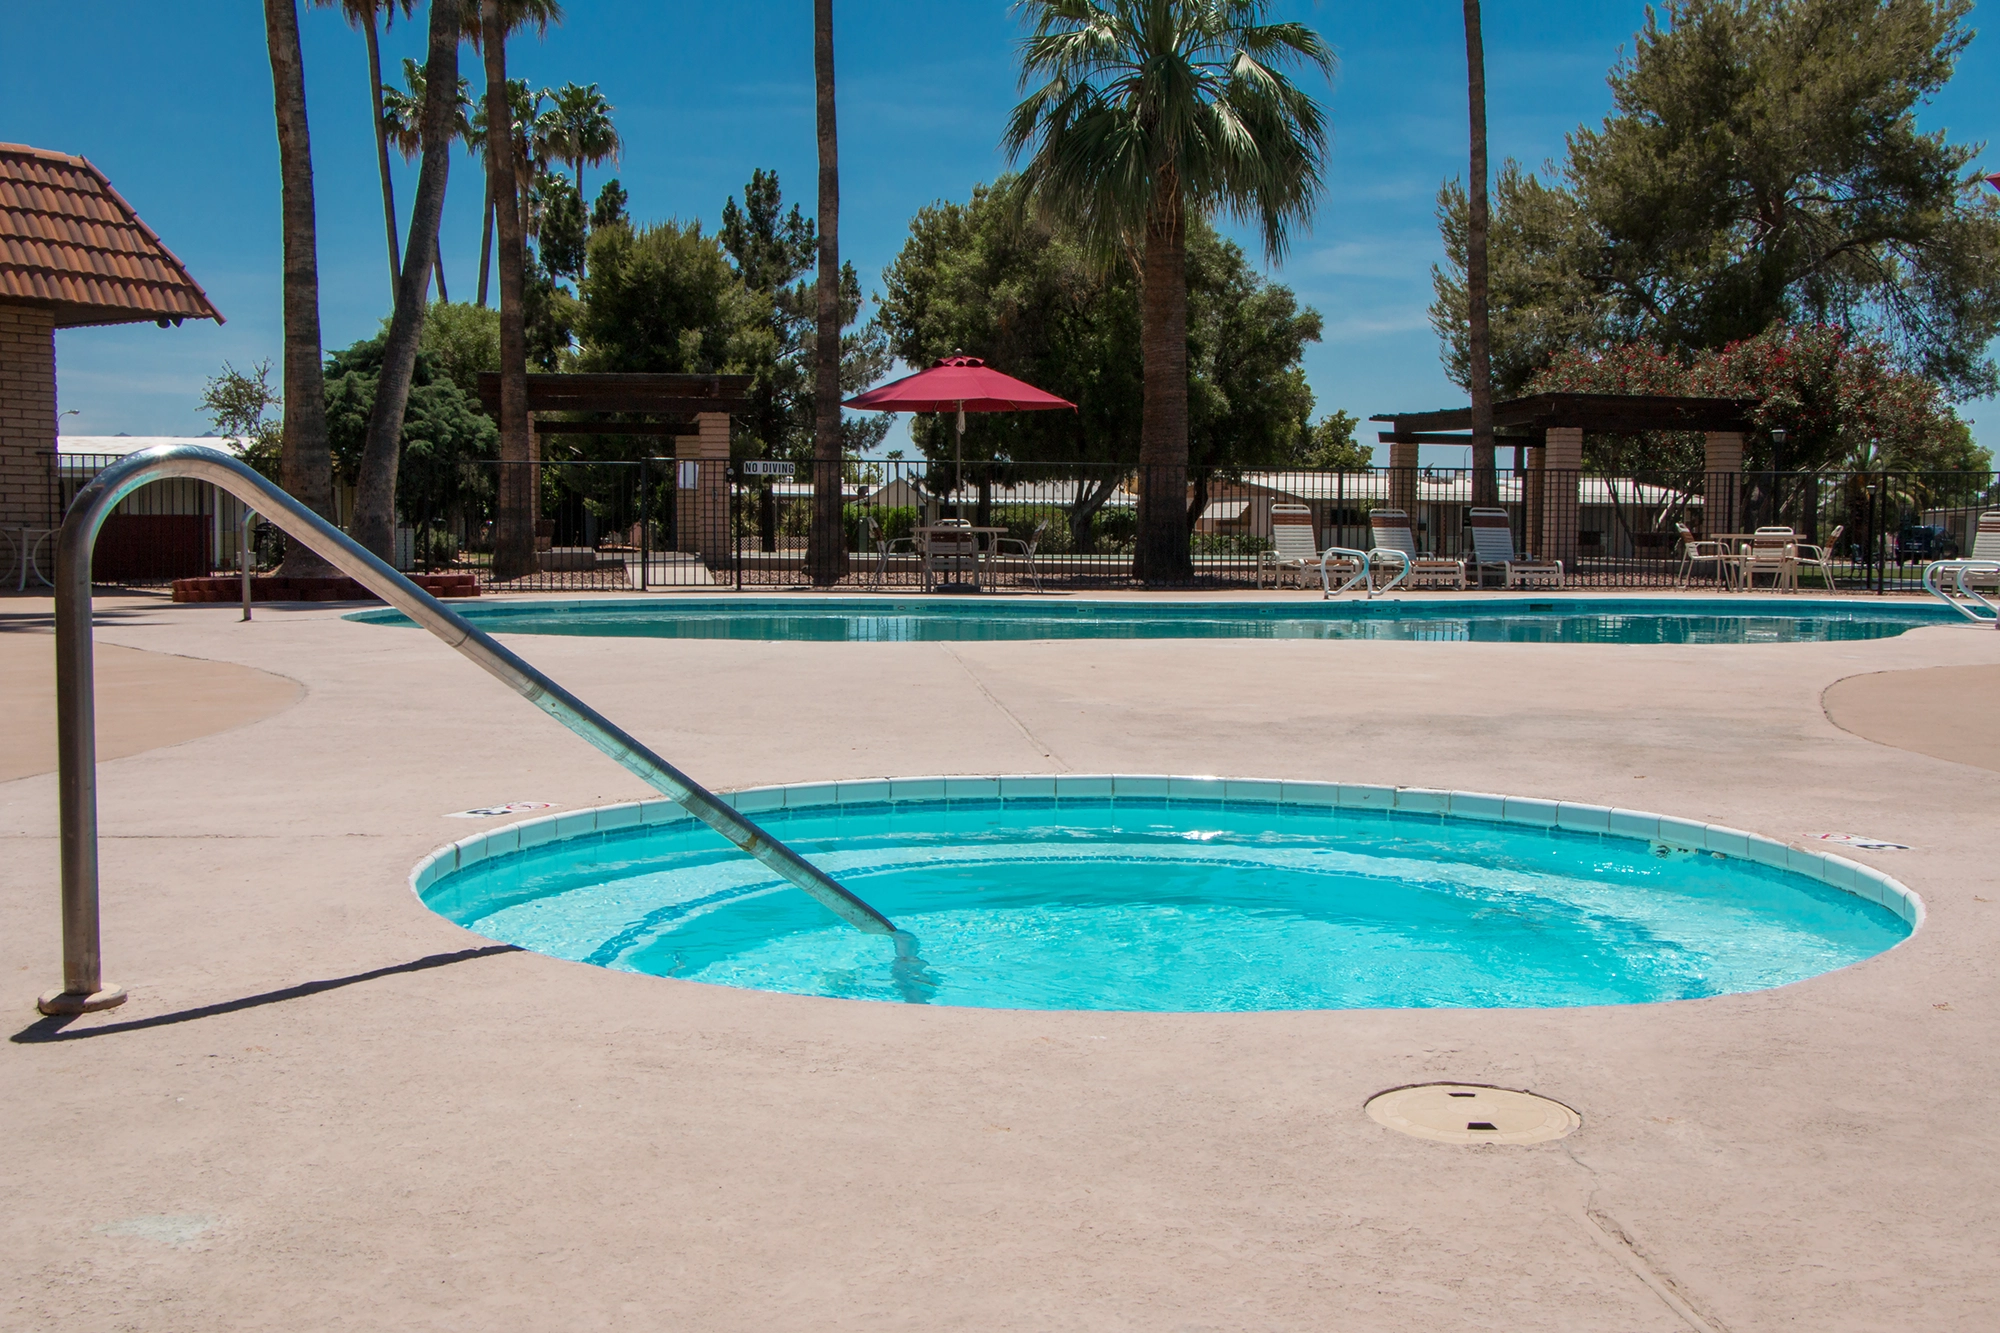 spa and pool at san estrella community